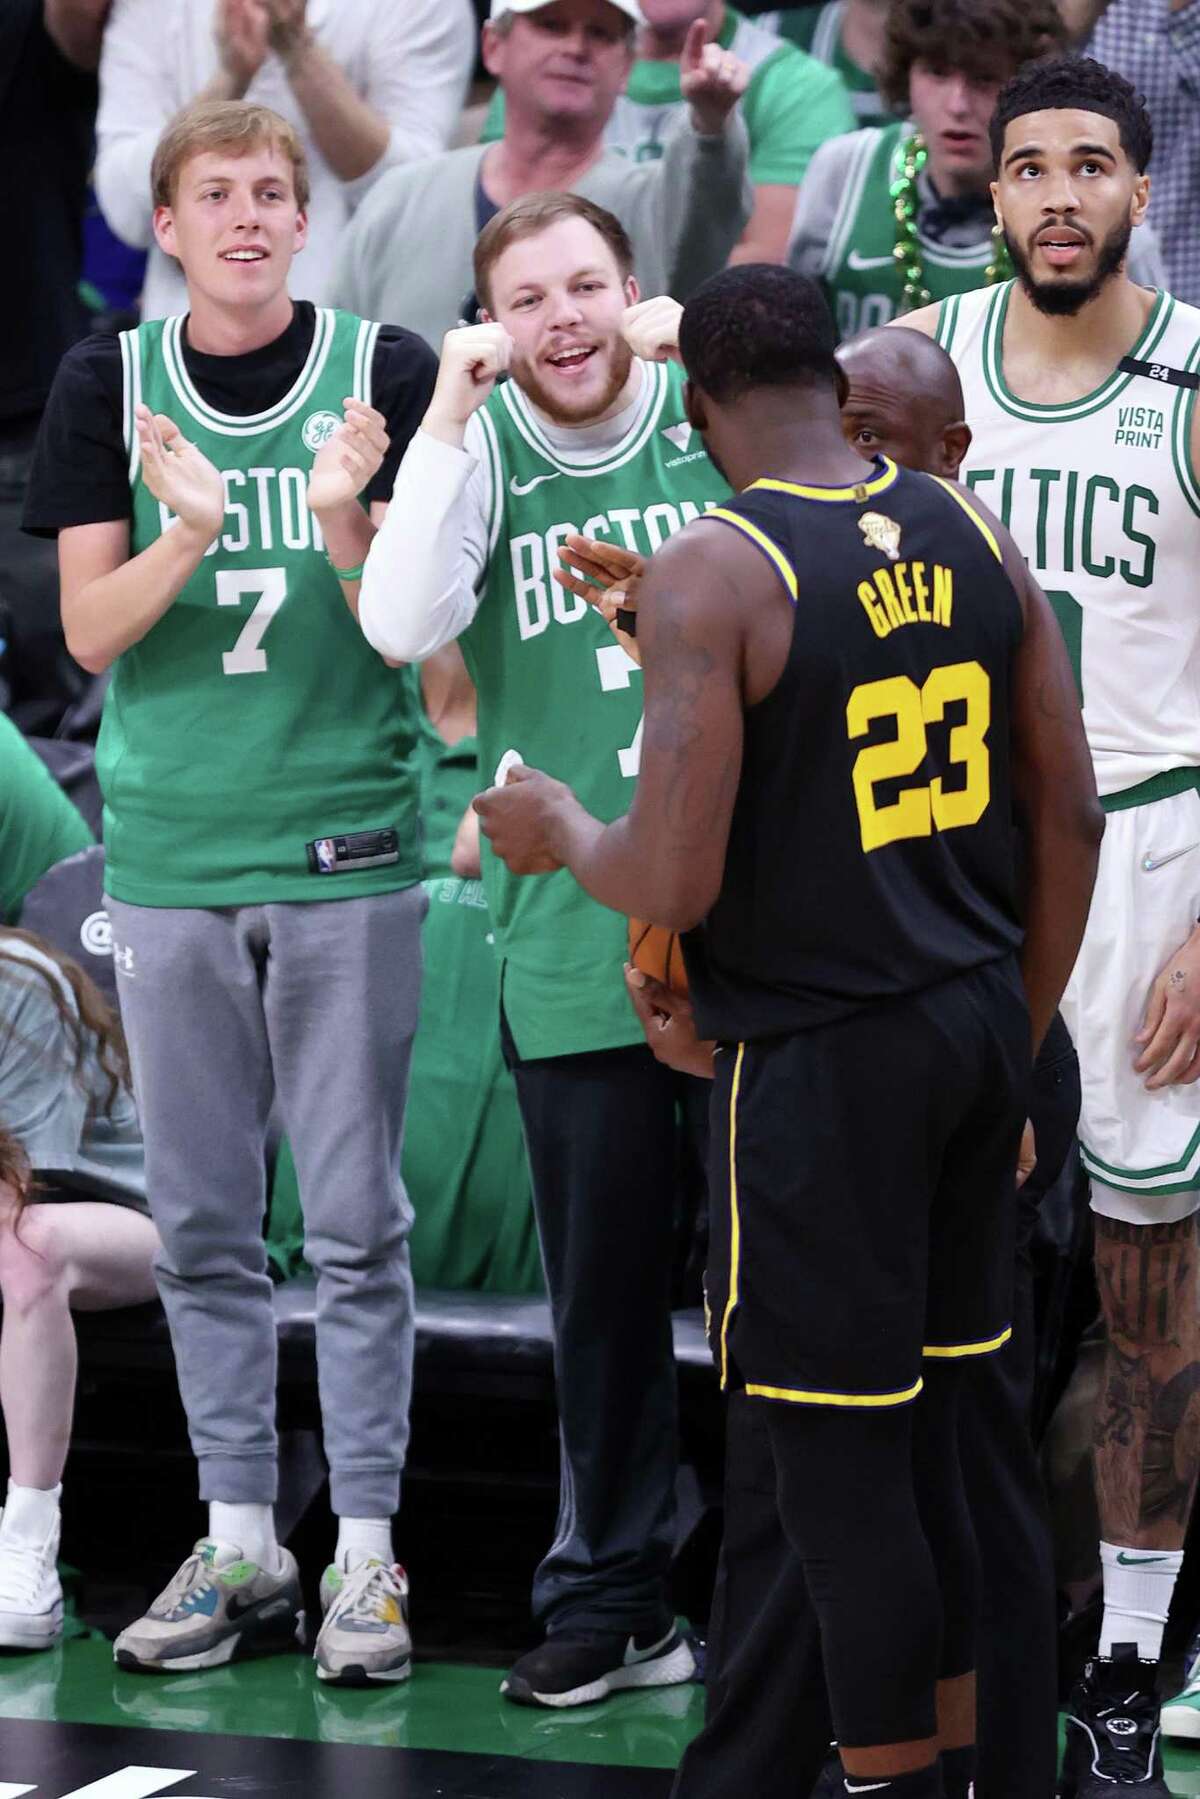 Boston Celtics’ fans tease Golden State Warriors’ Draymond Green after a 2nd quarter foul during Celtics’ 116-100 win during Game 3 of NBA Finals at TD Garden in Boston, Massachusetts, on Wednesday, June 8, 2022.